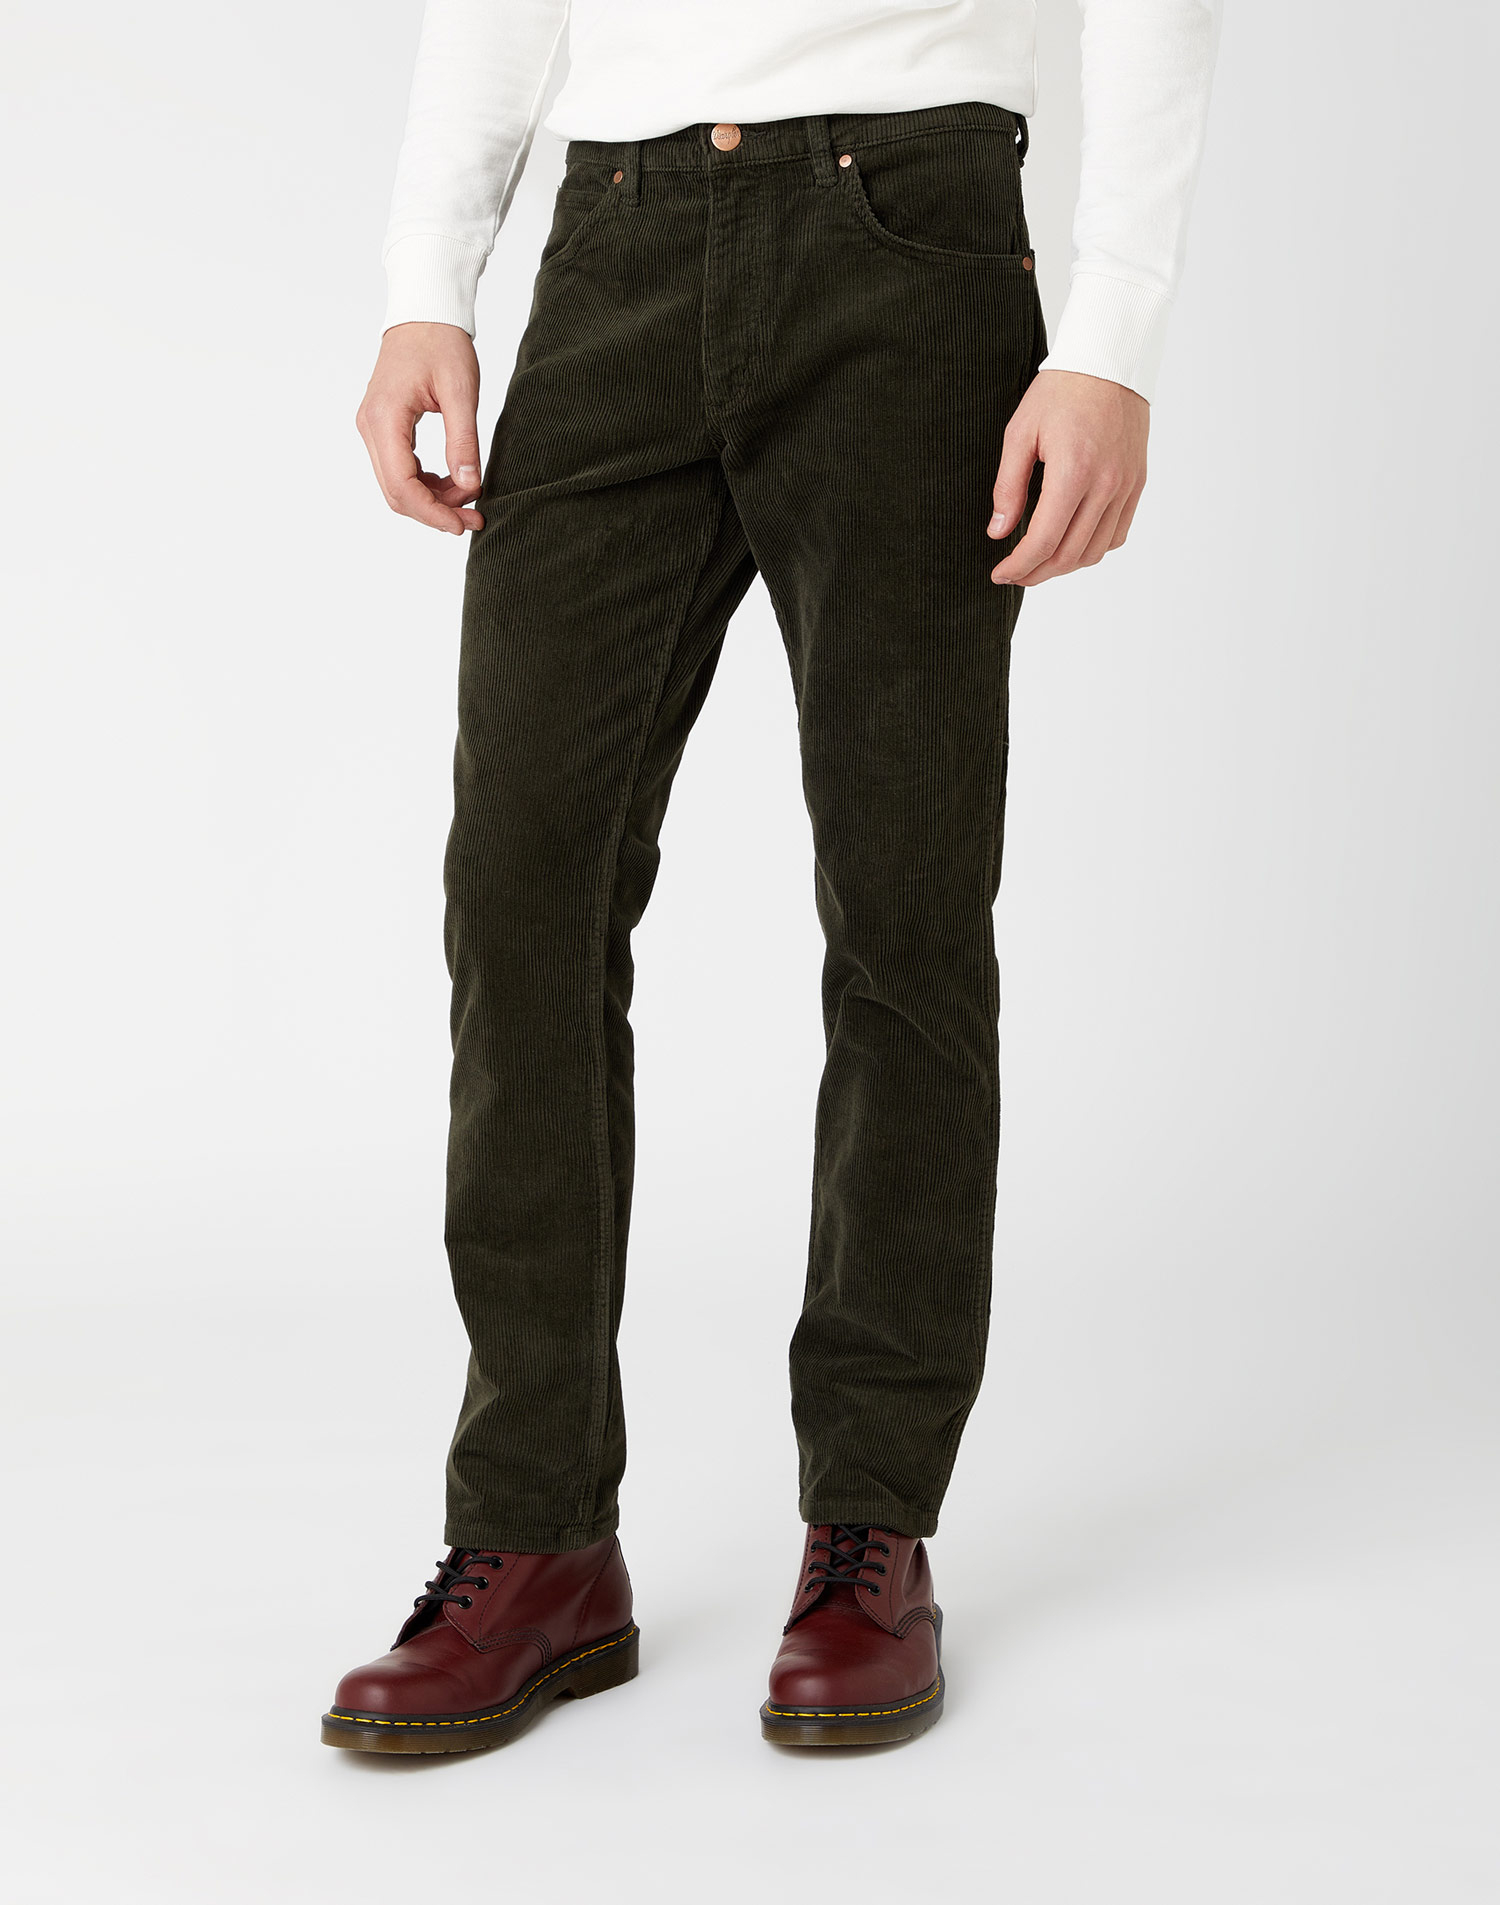 Pantalones vaqueros de pana de hombre Wrangler Greensboro slim, modelo  W15QA2H29, burdeos oscuro